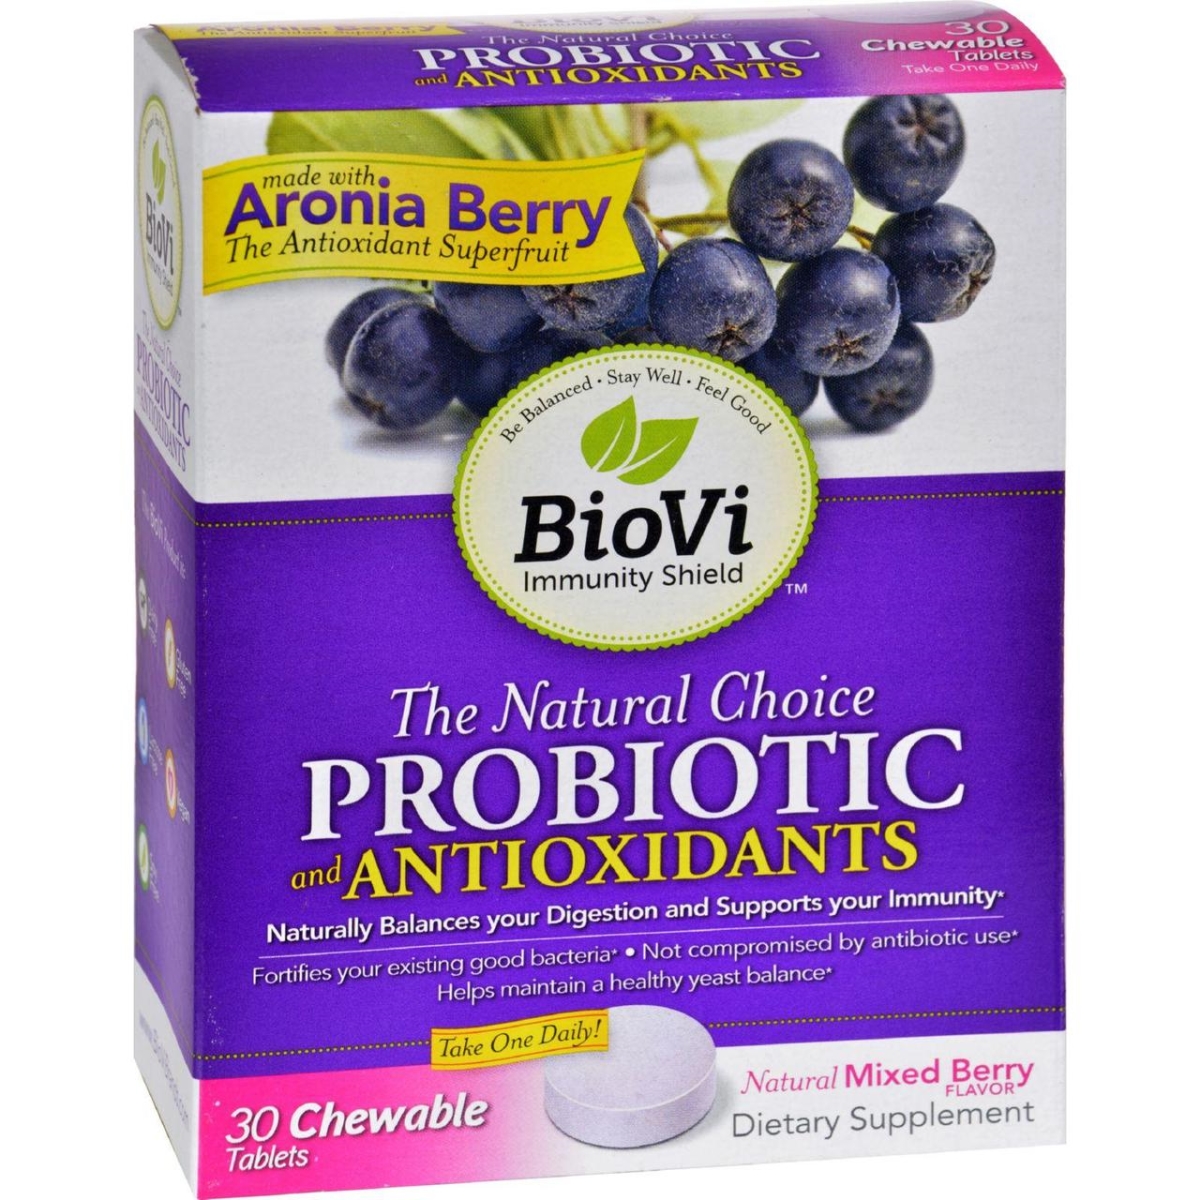 Hg1636471 Probiotic Antioxidant Blend - 30 Chewable Tablets